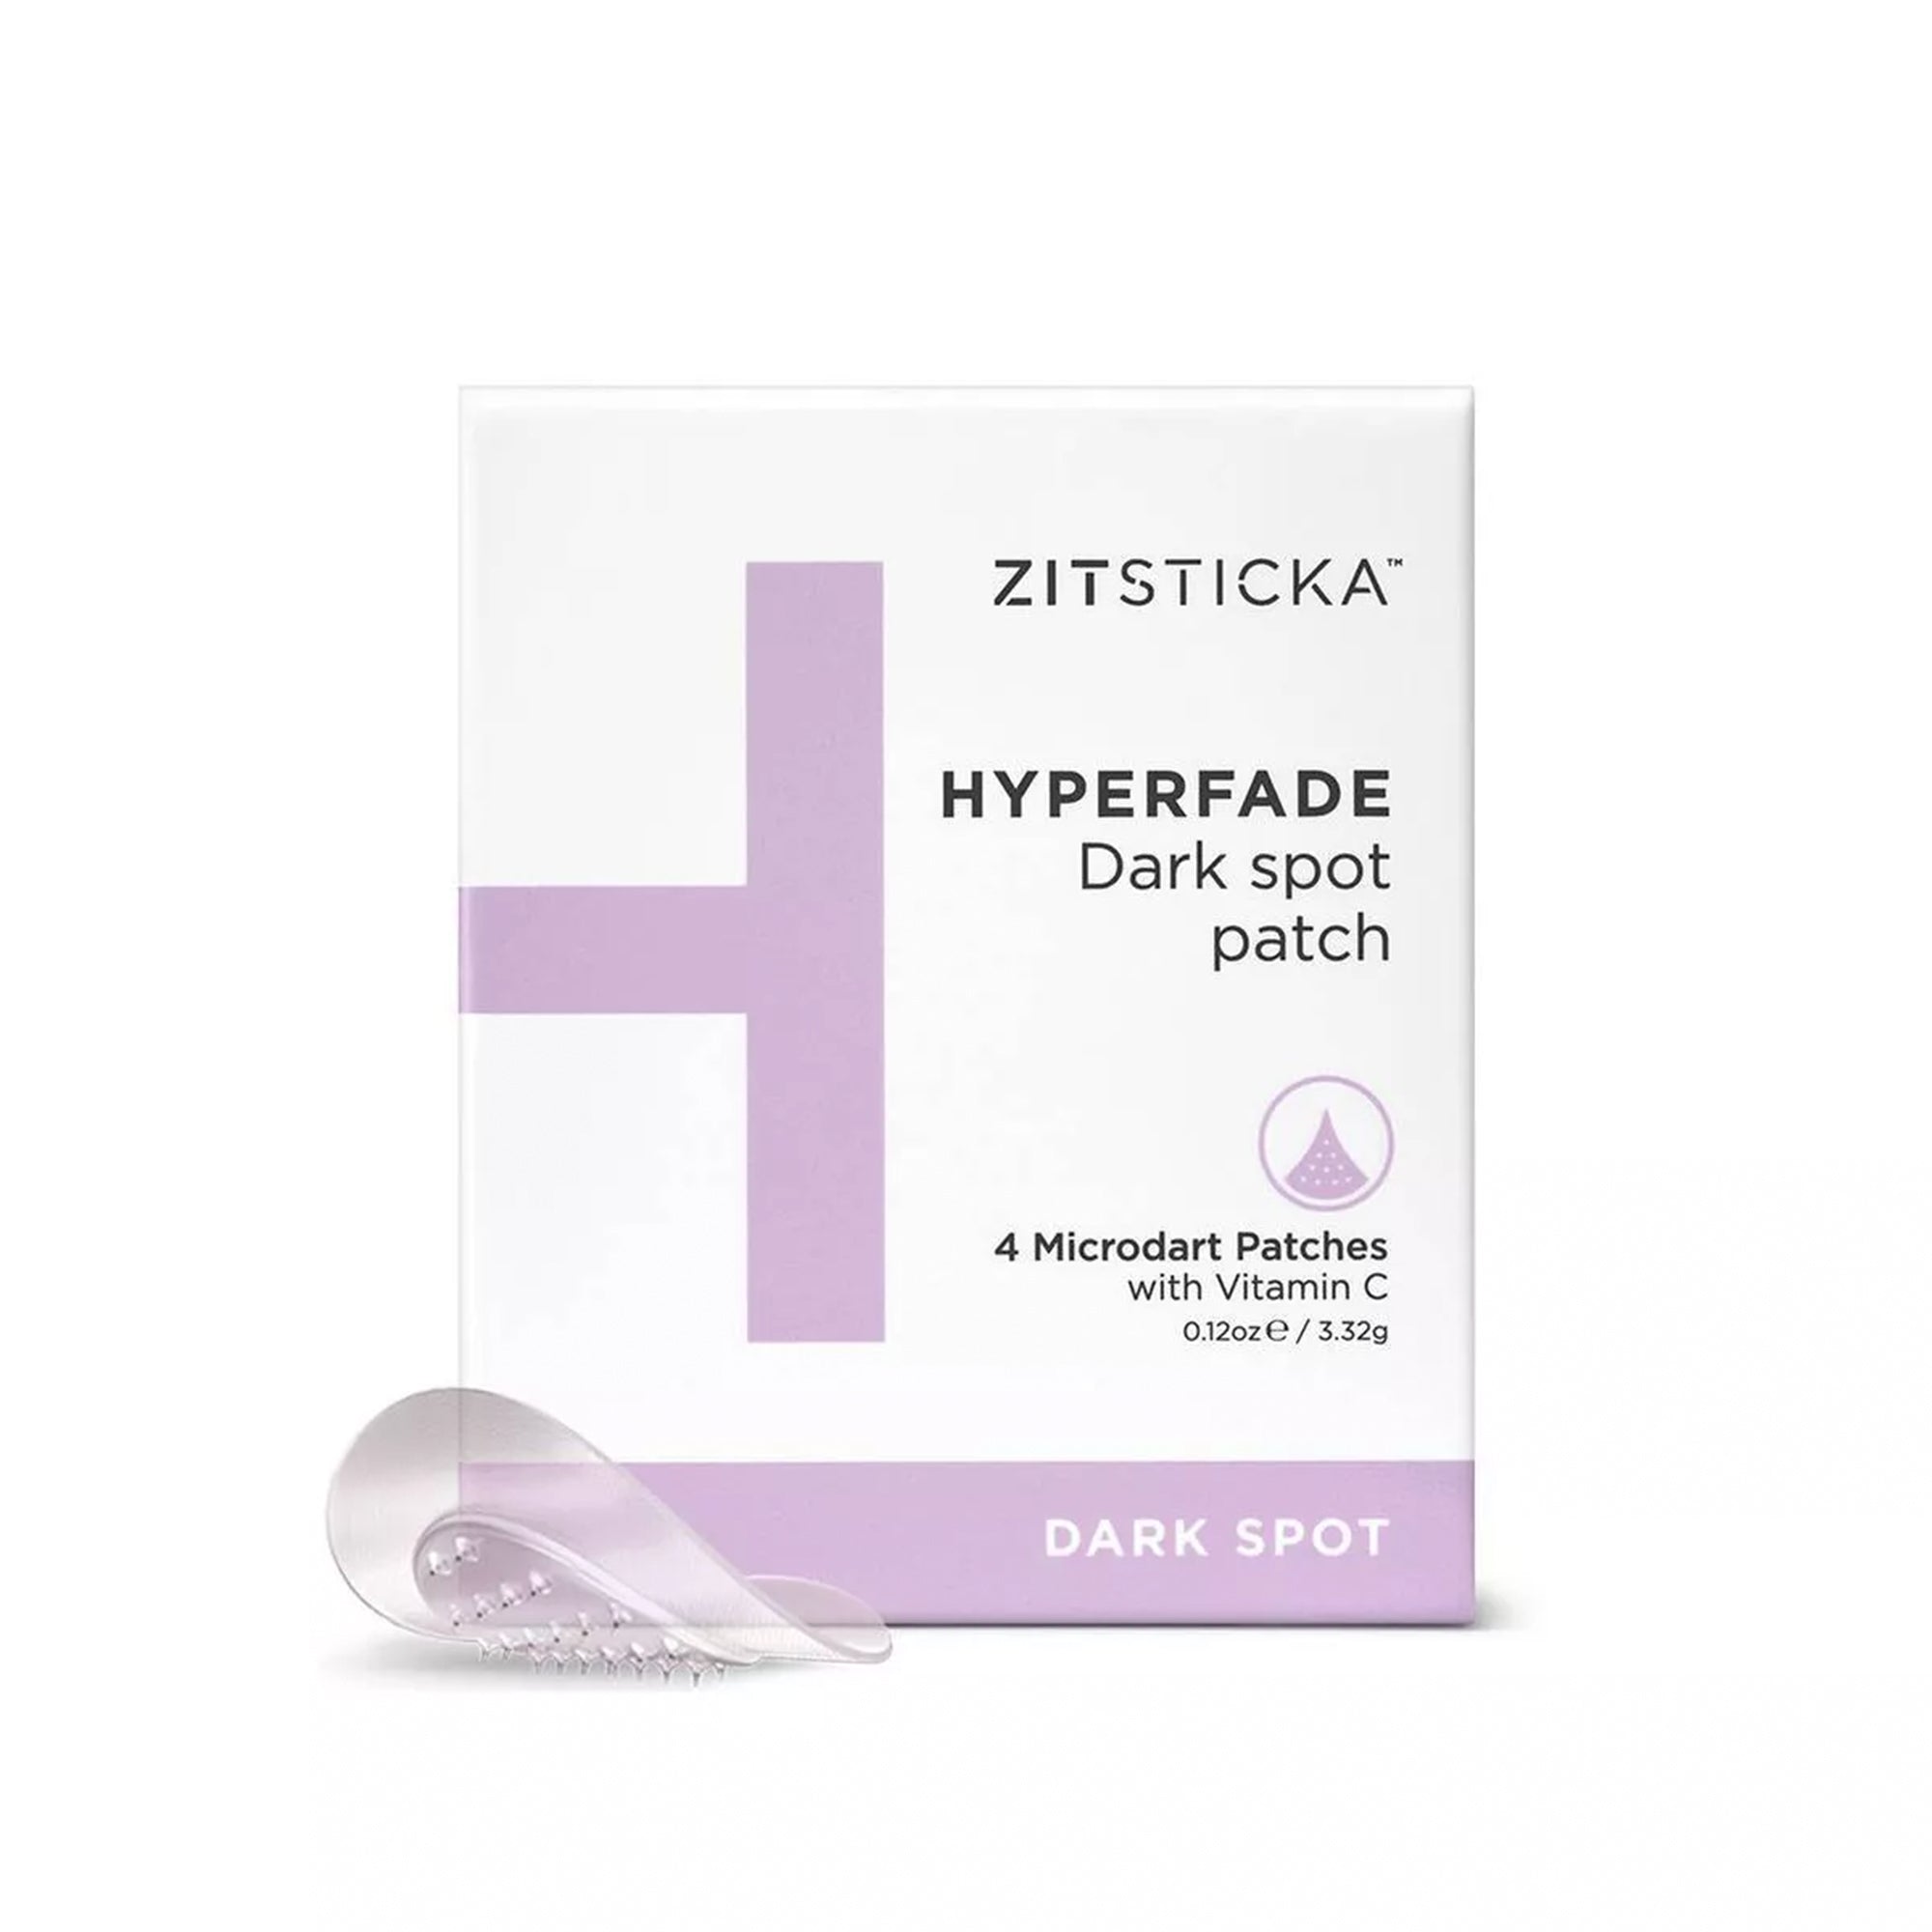 ZitSticka Hyperfade Dark Spot Microdart Pimple Patch, 4ct